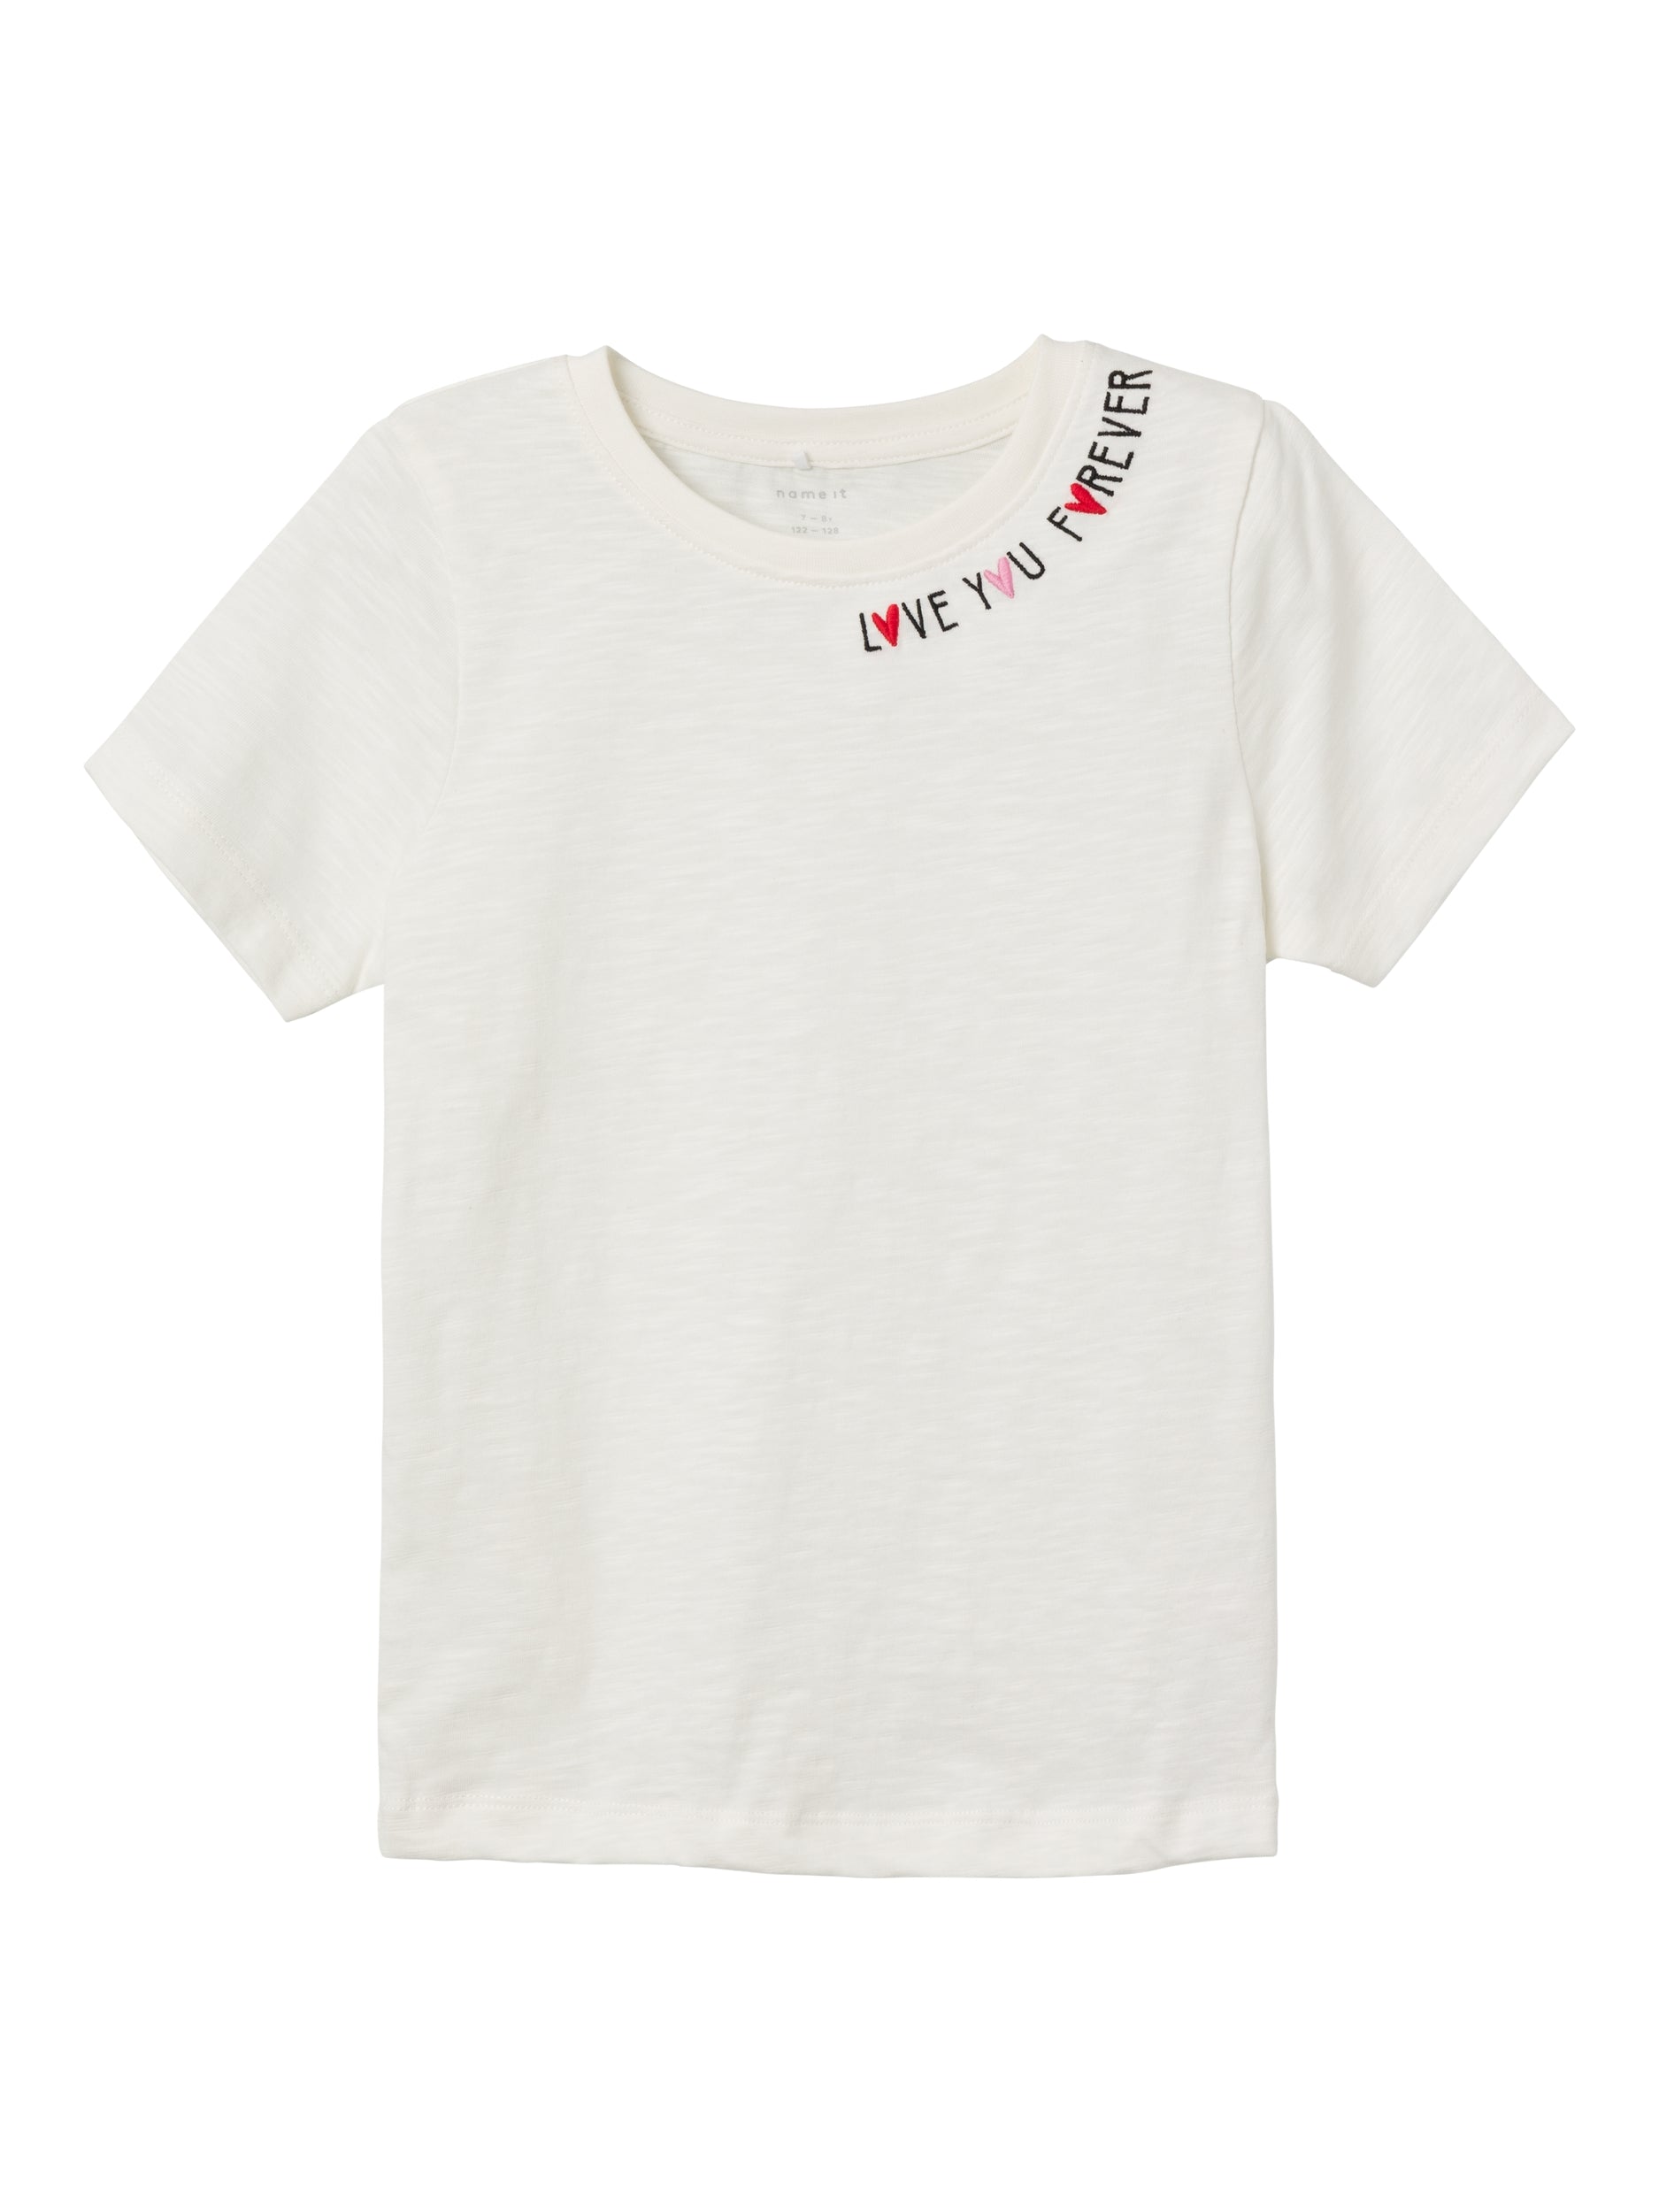 Name It t-shirt kids bianco con stampa scritta love you